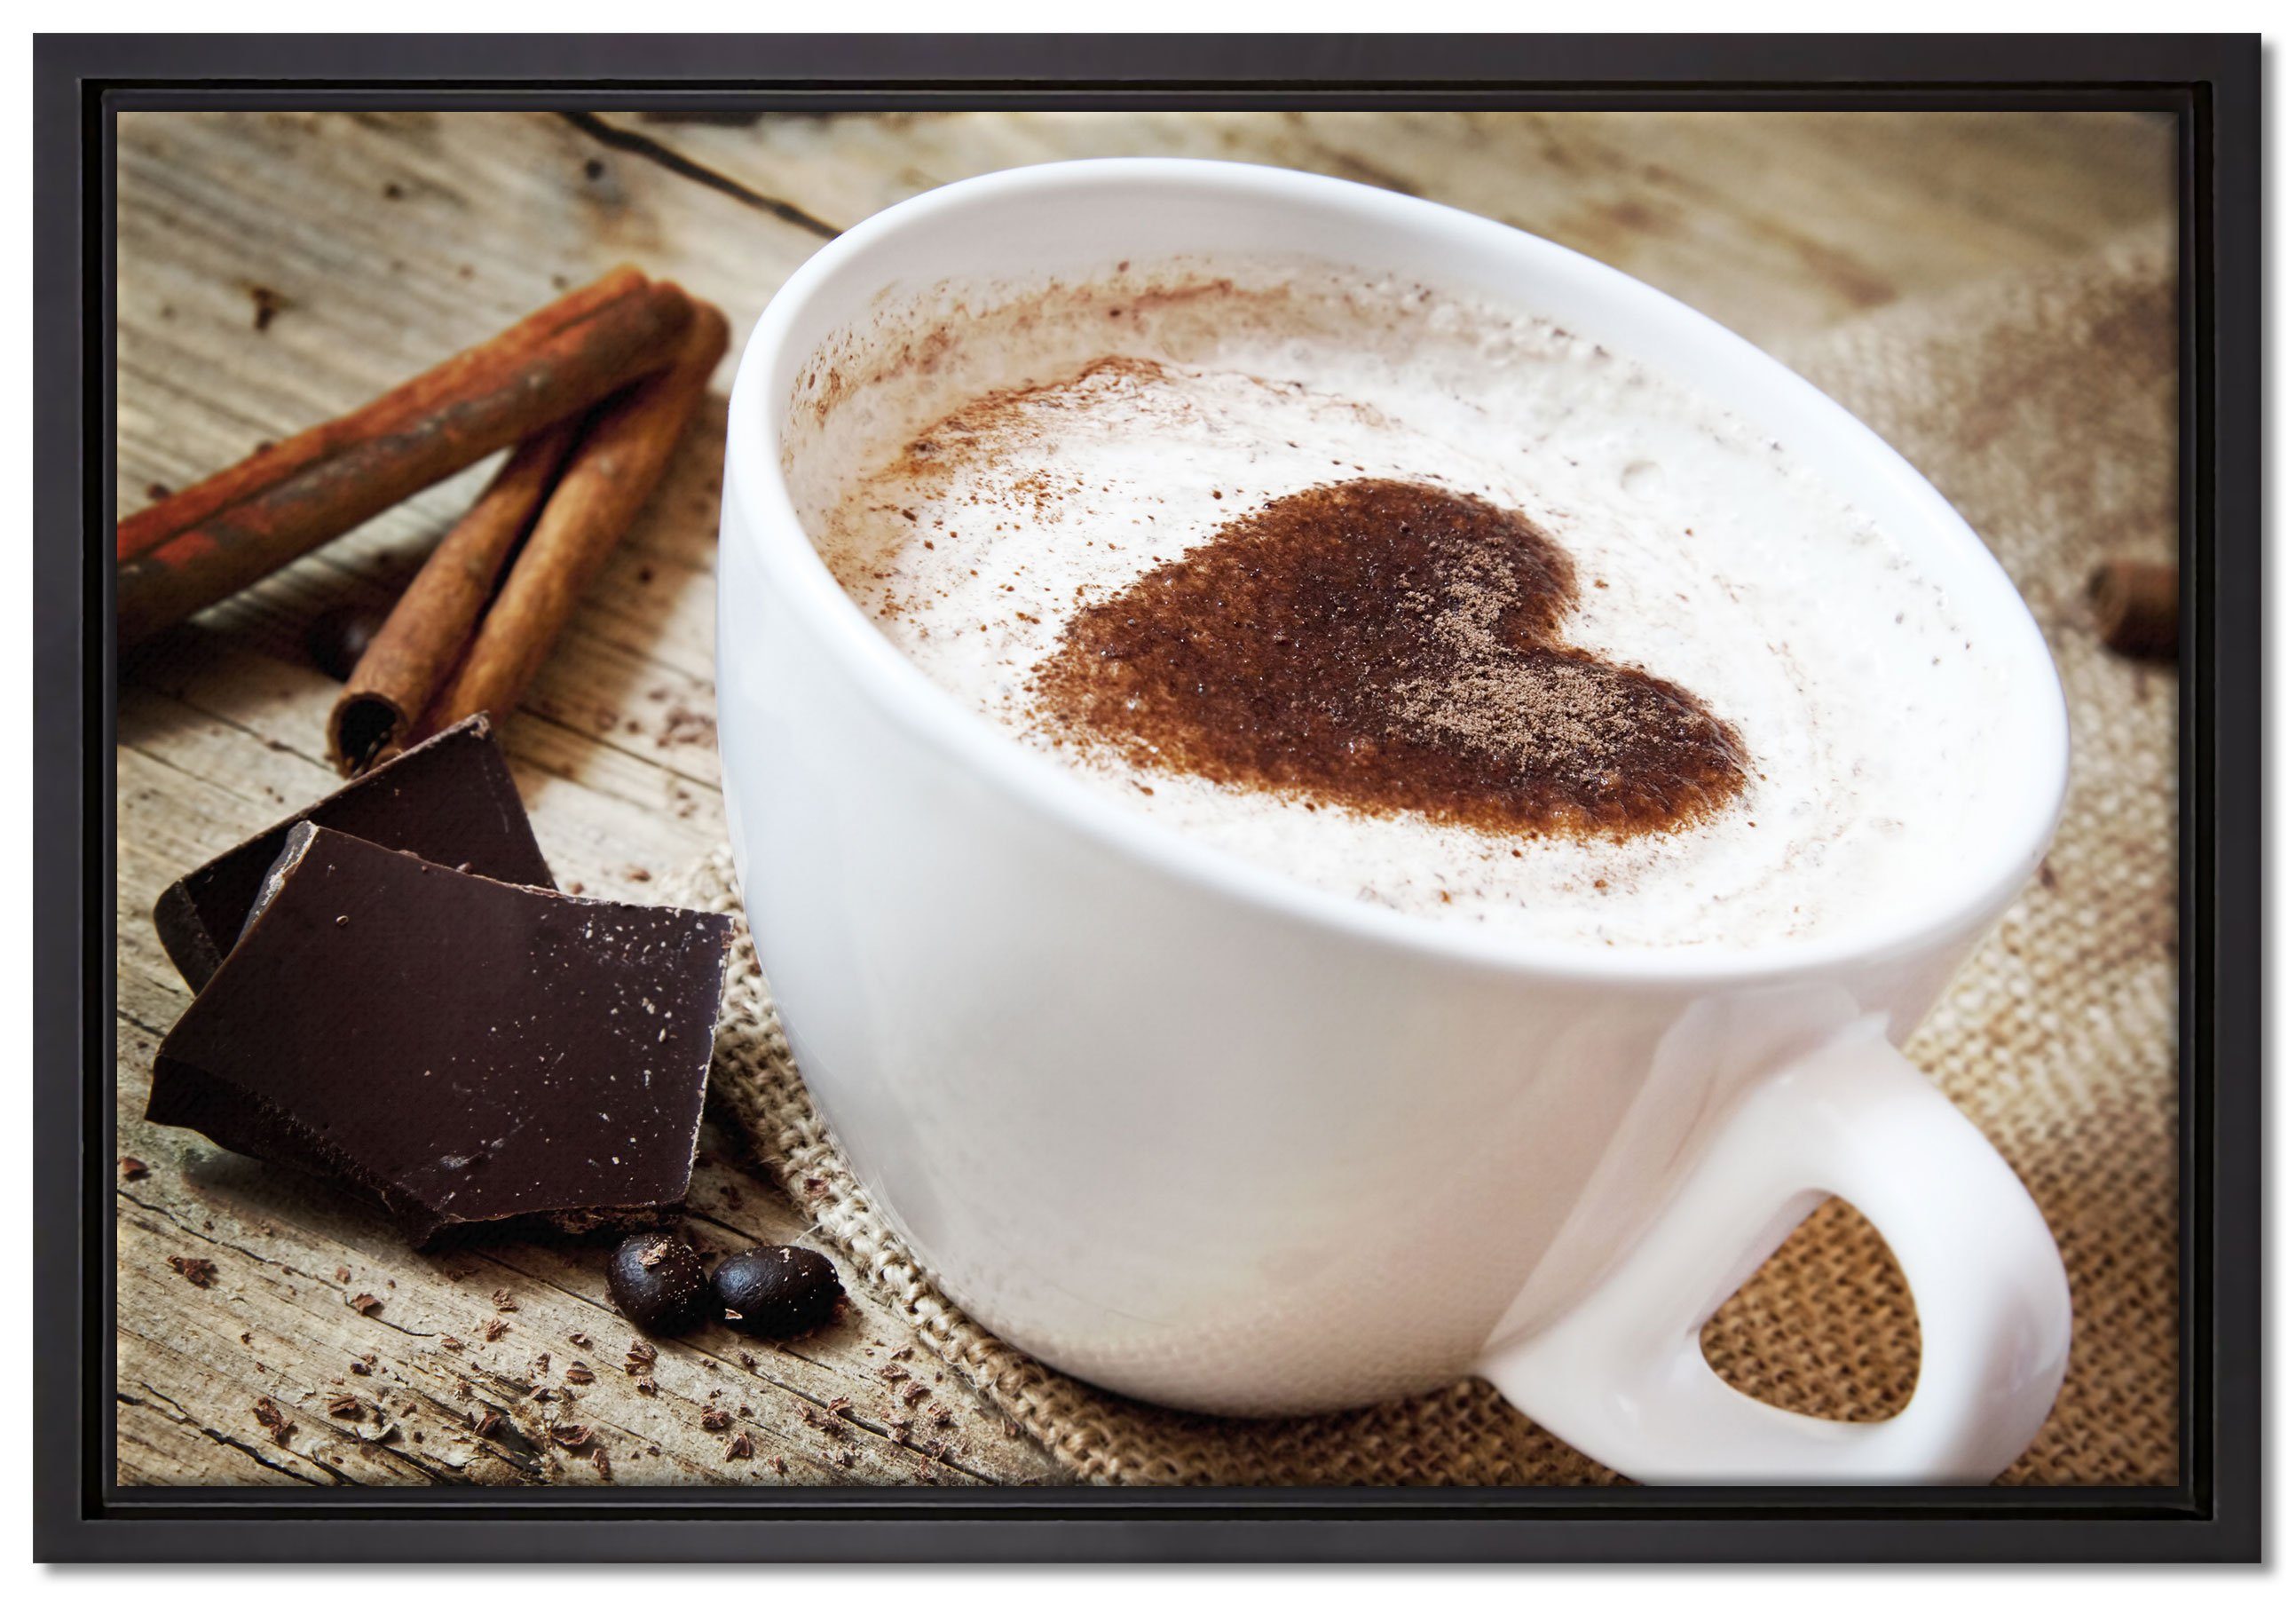 Pixxprint Leinwandbild Tasse Kaffee mit Schokolade, Wanddekoration (1 St), Leinwandbild fertig bespannt, in einem Schattenfugen-Bilderrahmen gefasst, inkl. Zackenaufhänger